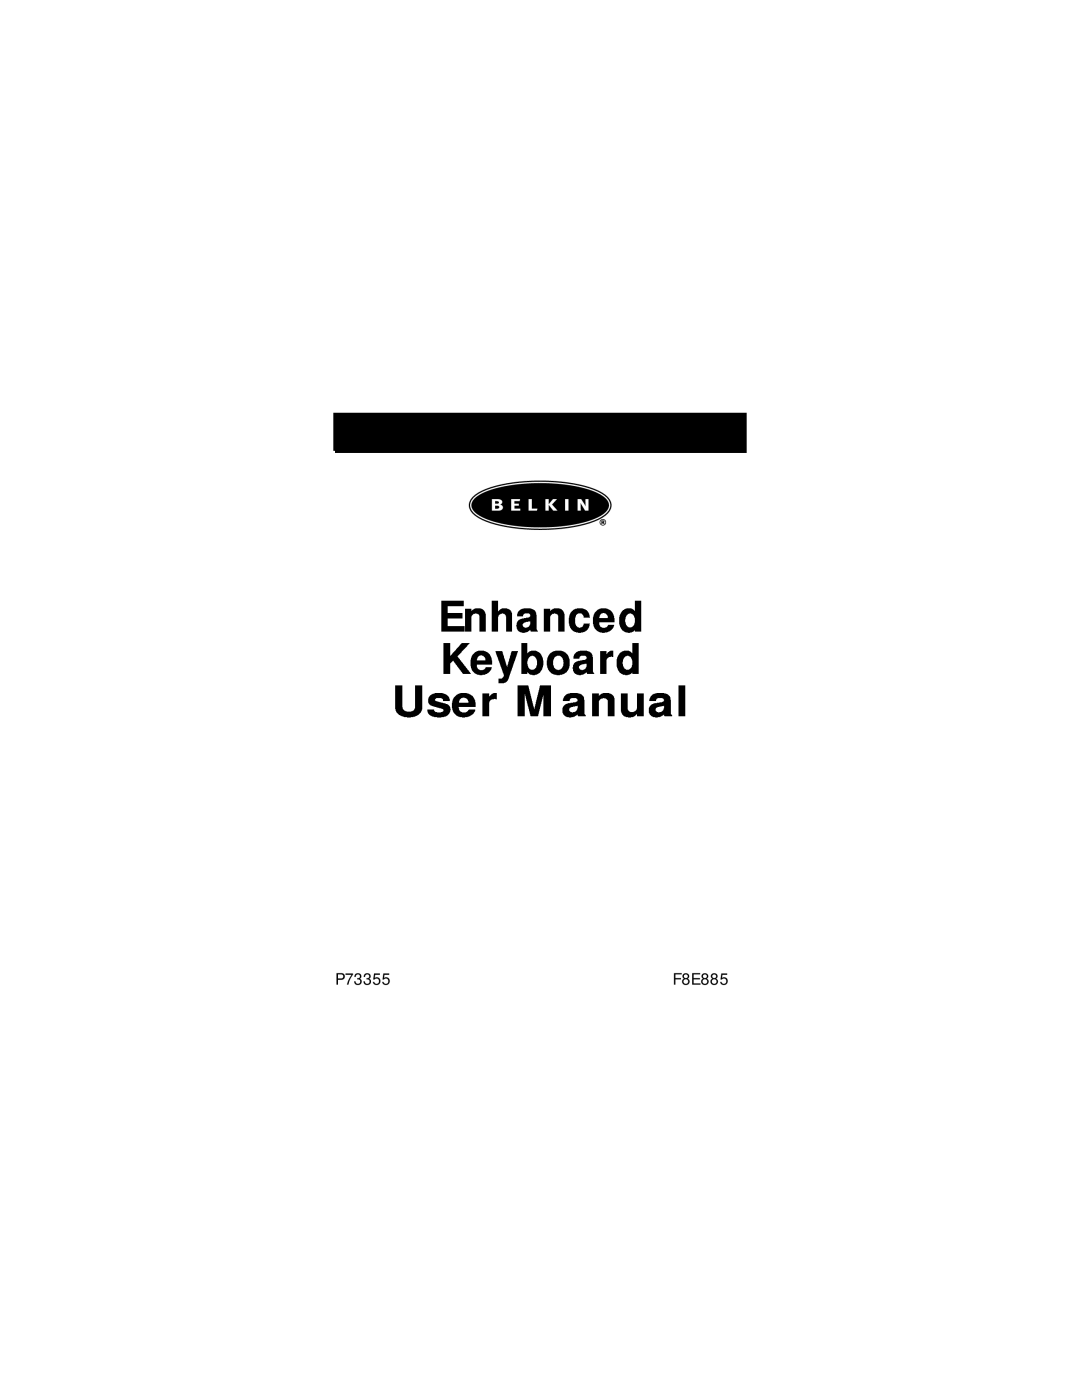 Belkin F8E885 user manual Enhanced Keyboard User Manual, P73355 